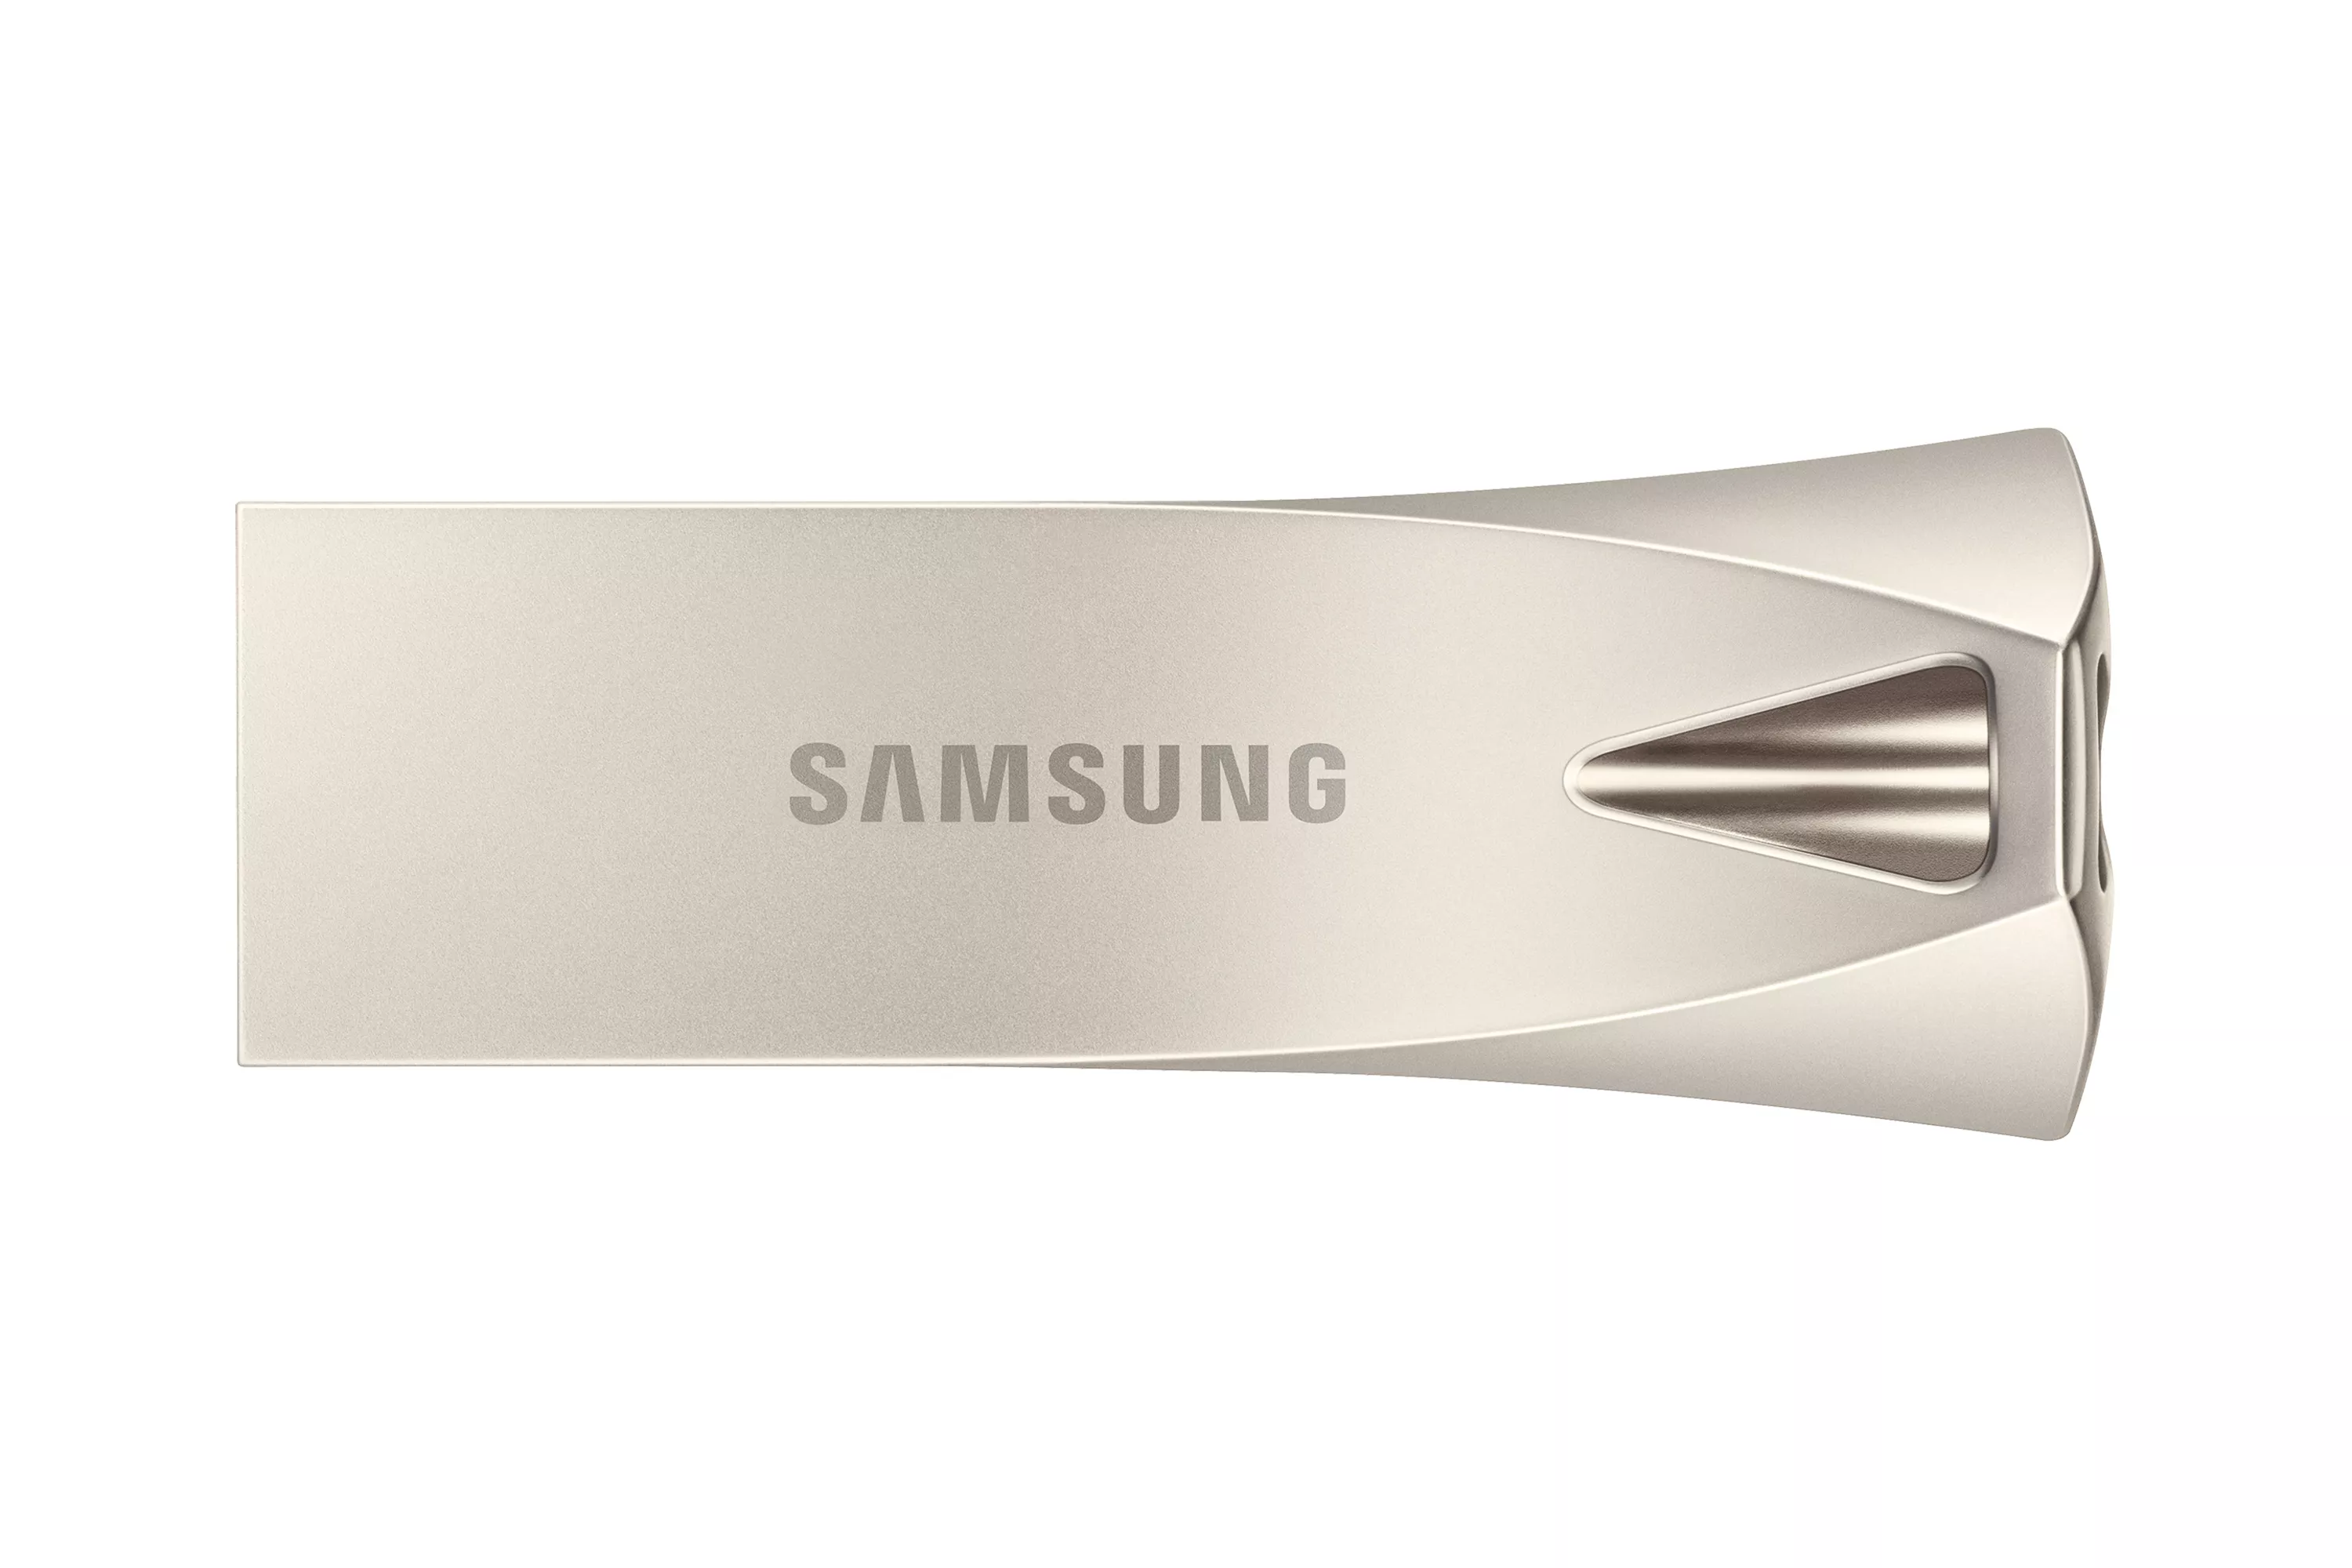 Achat SAMSUNG BAR PLUS 256Go USB 3.1 Champagne Silver au meilleur prix